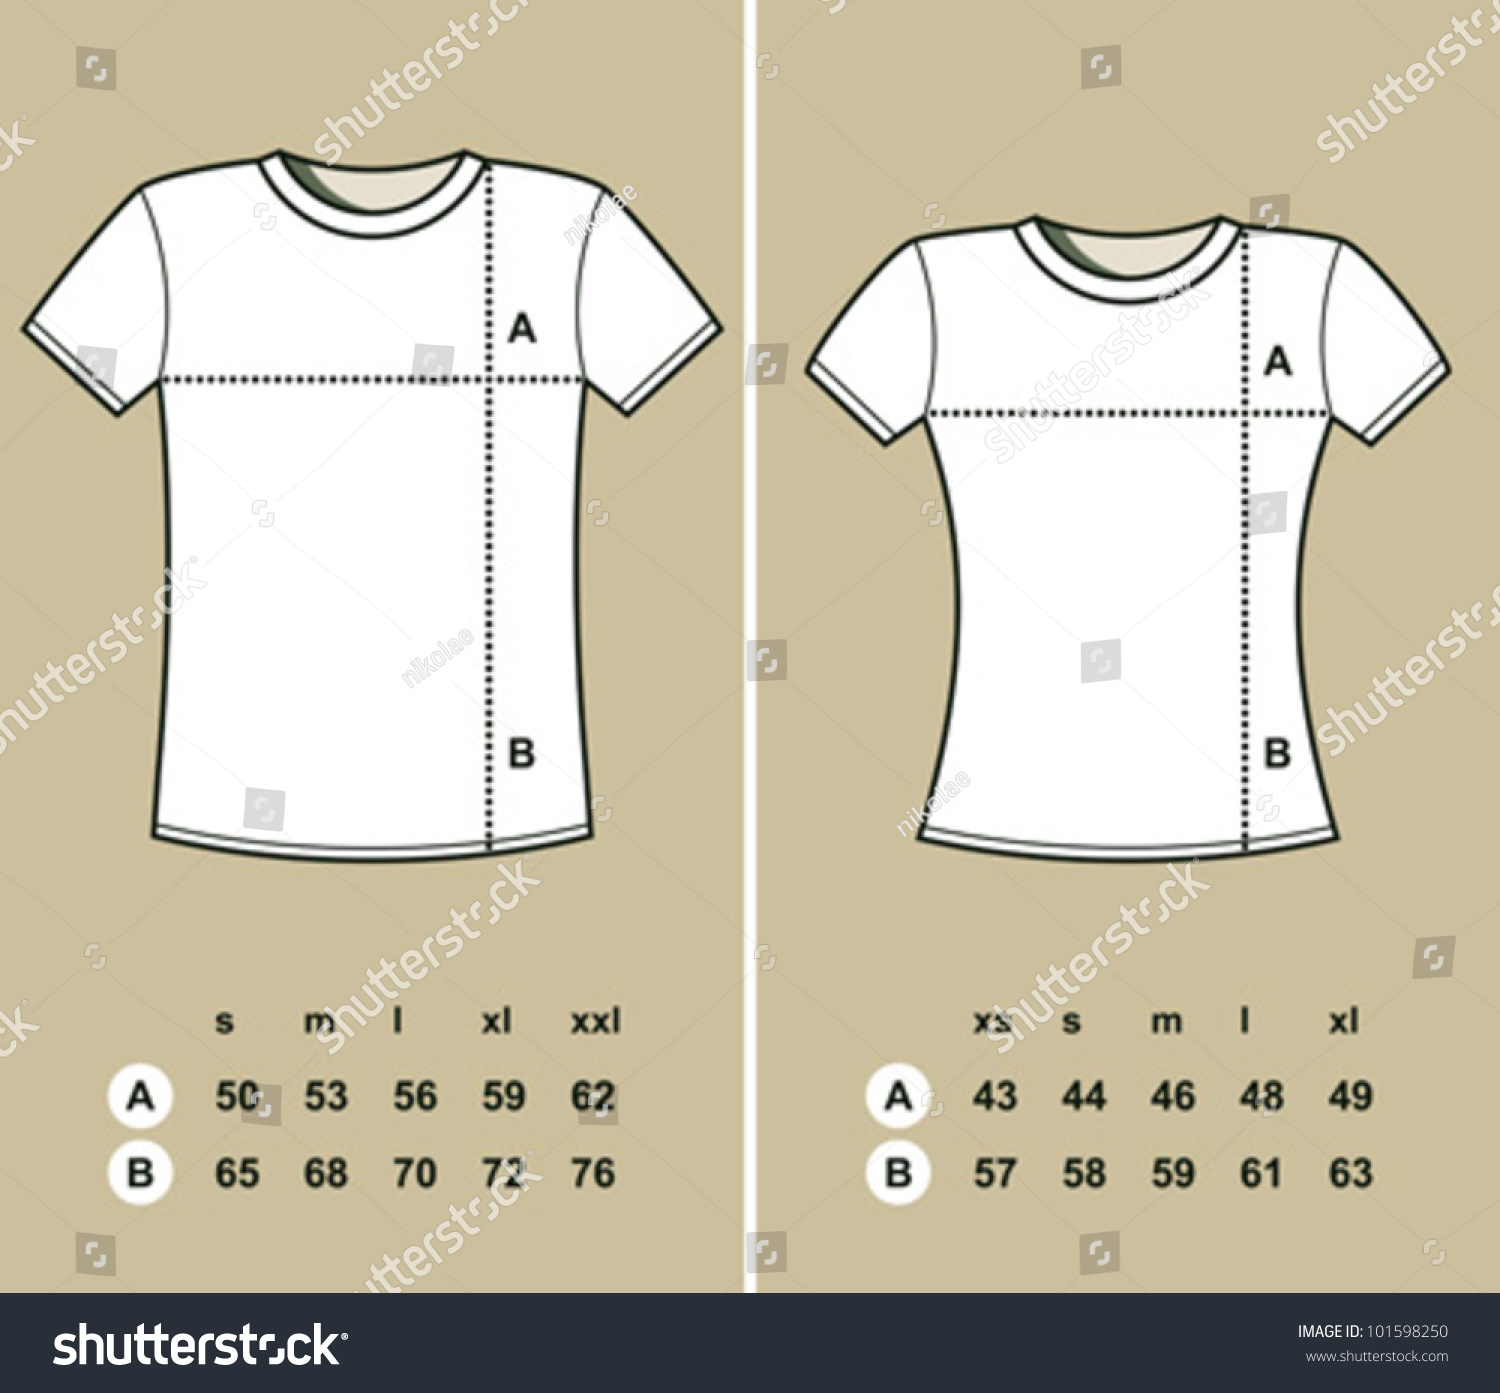 men's shirt sizes to women's